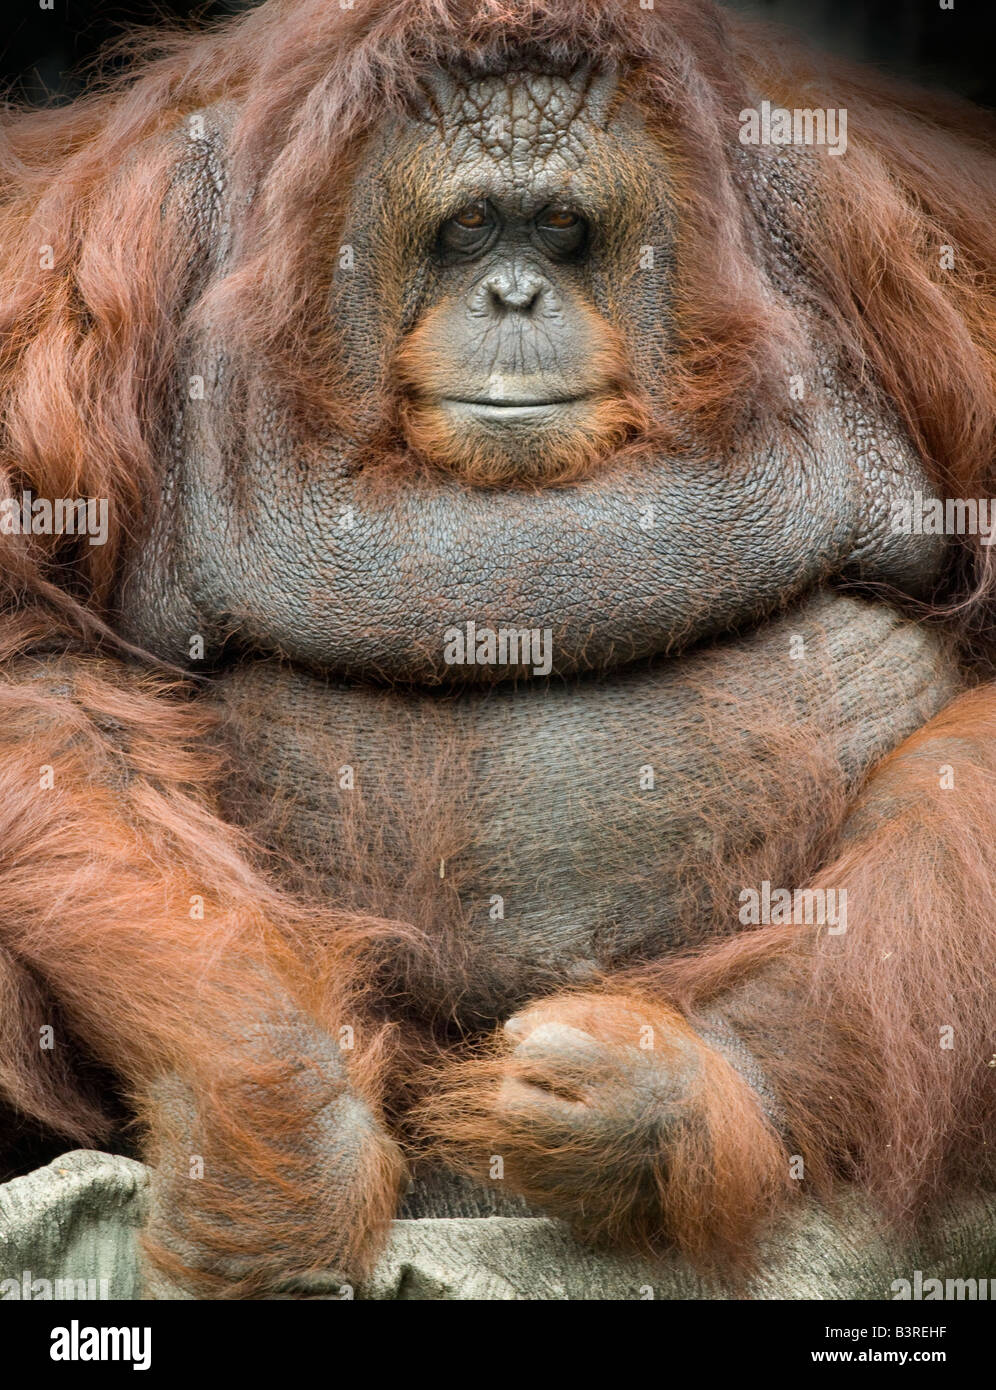 Flanged male orangutan Stock Photo